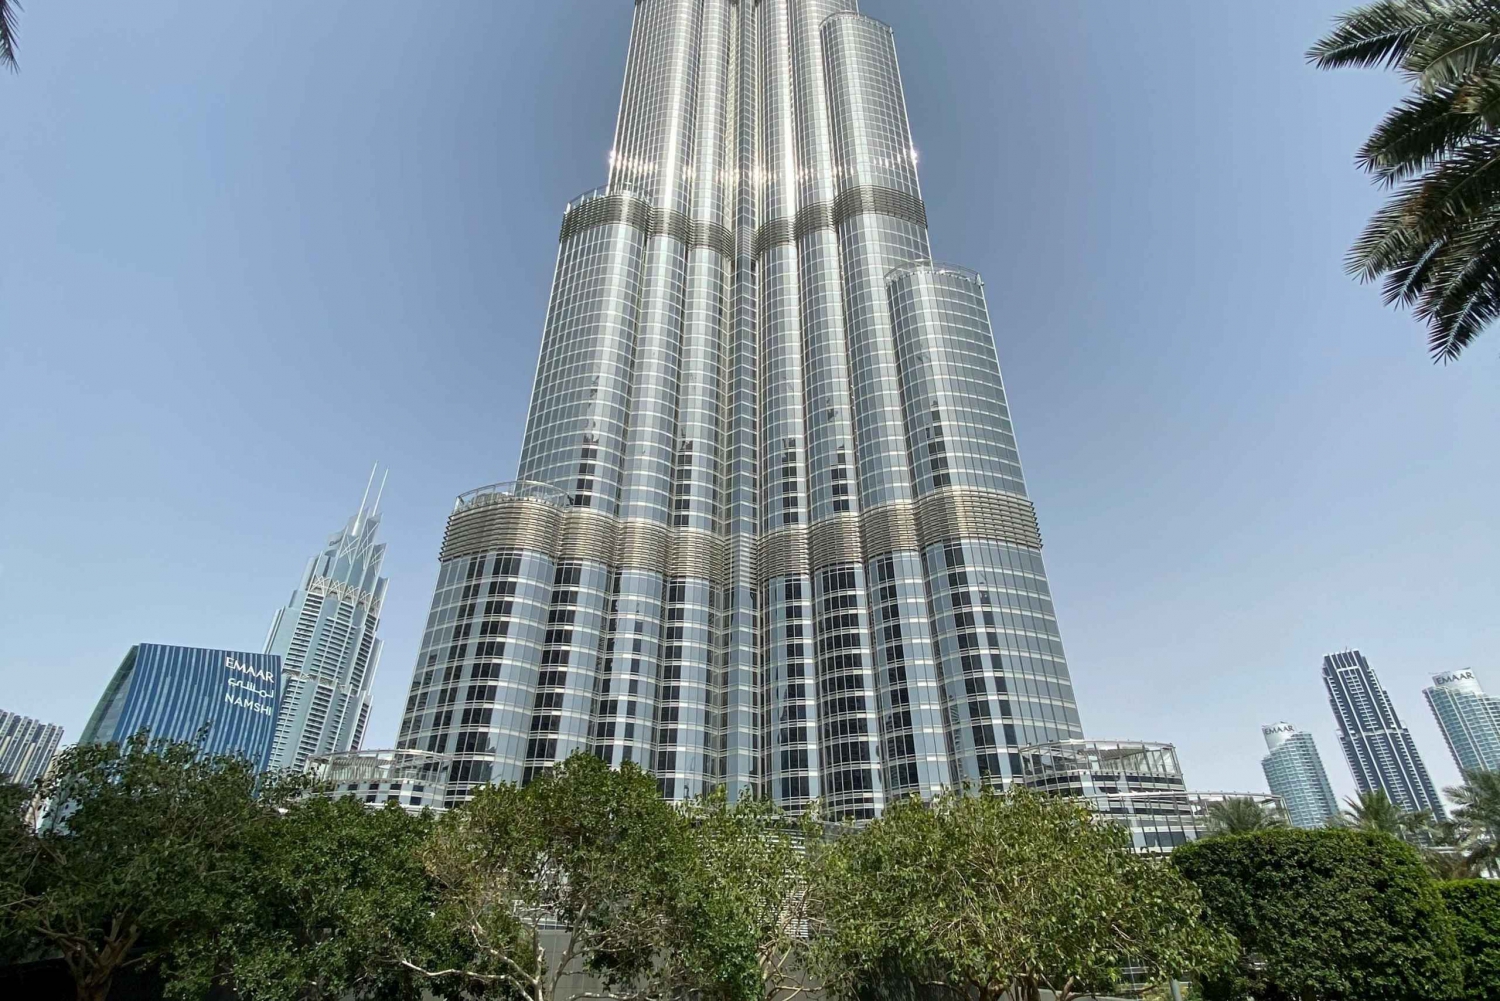 Dubai Top 10 Famous Attractions with Burj Khalifa Entry